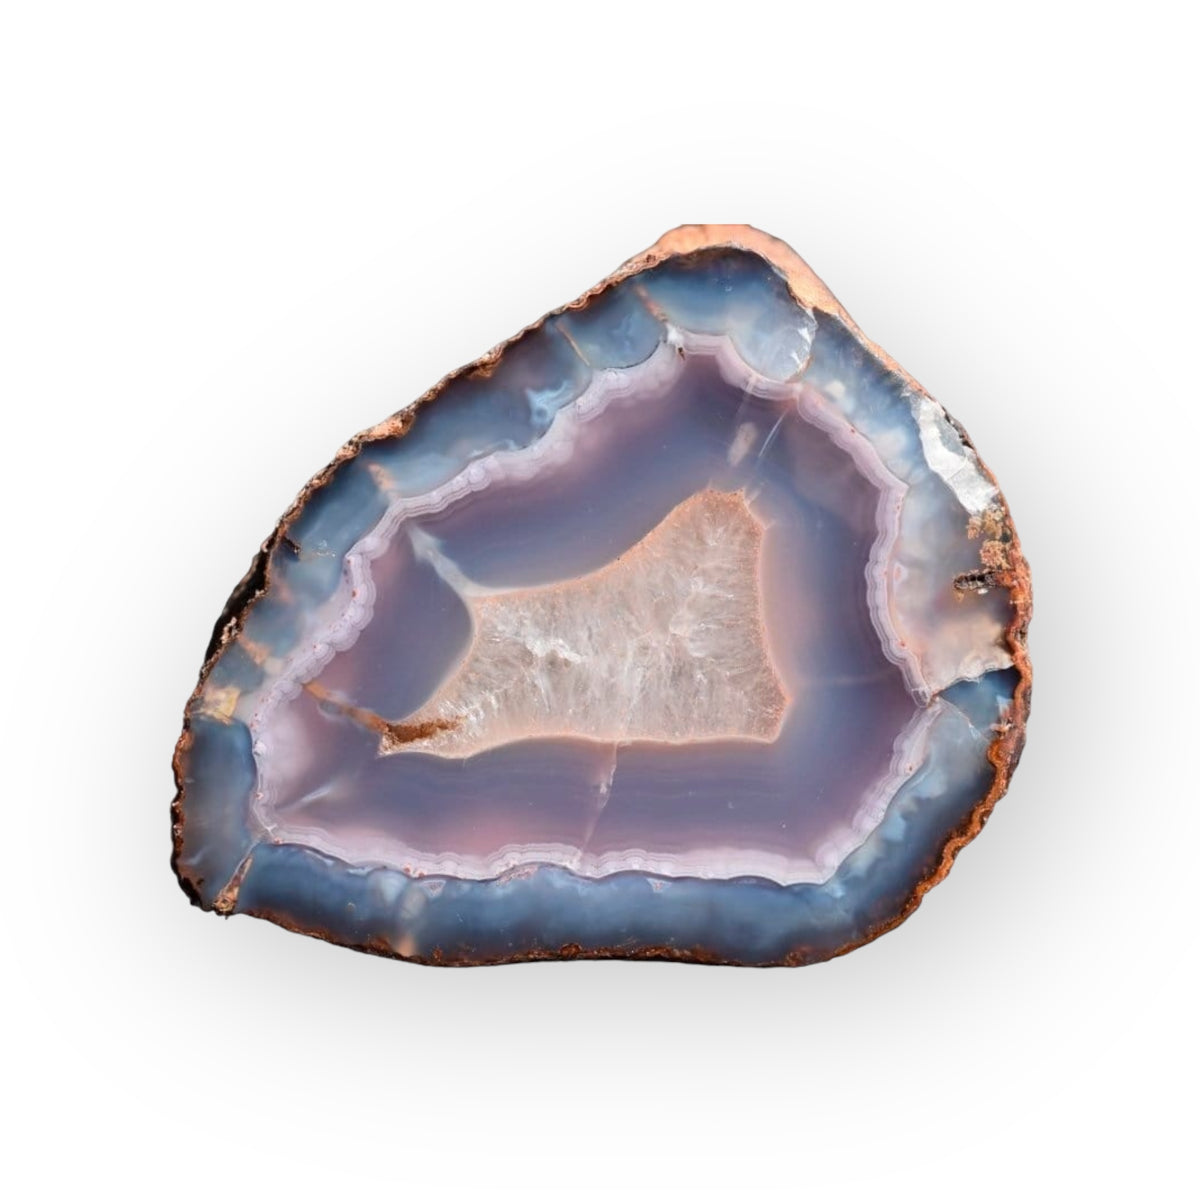 Coyamito Agate 01-FB01-4A - Del Rey Agates Gems & Minerals Inc.